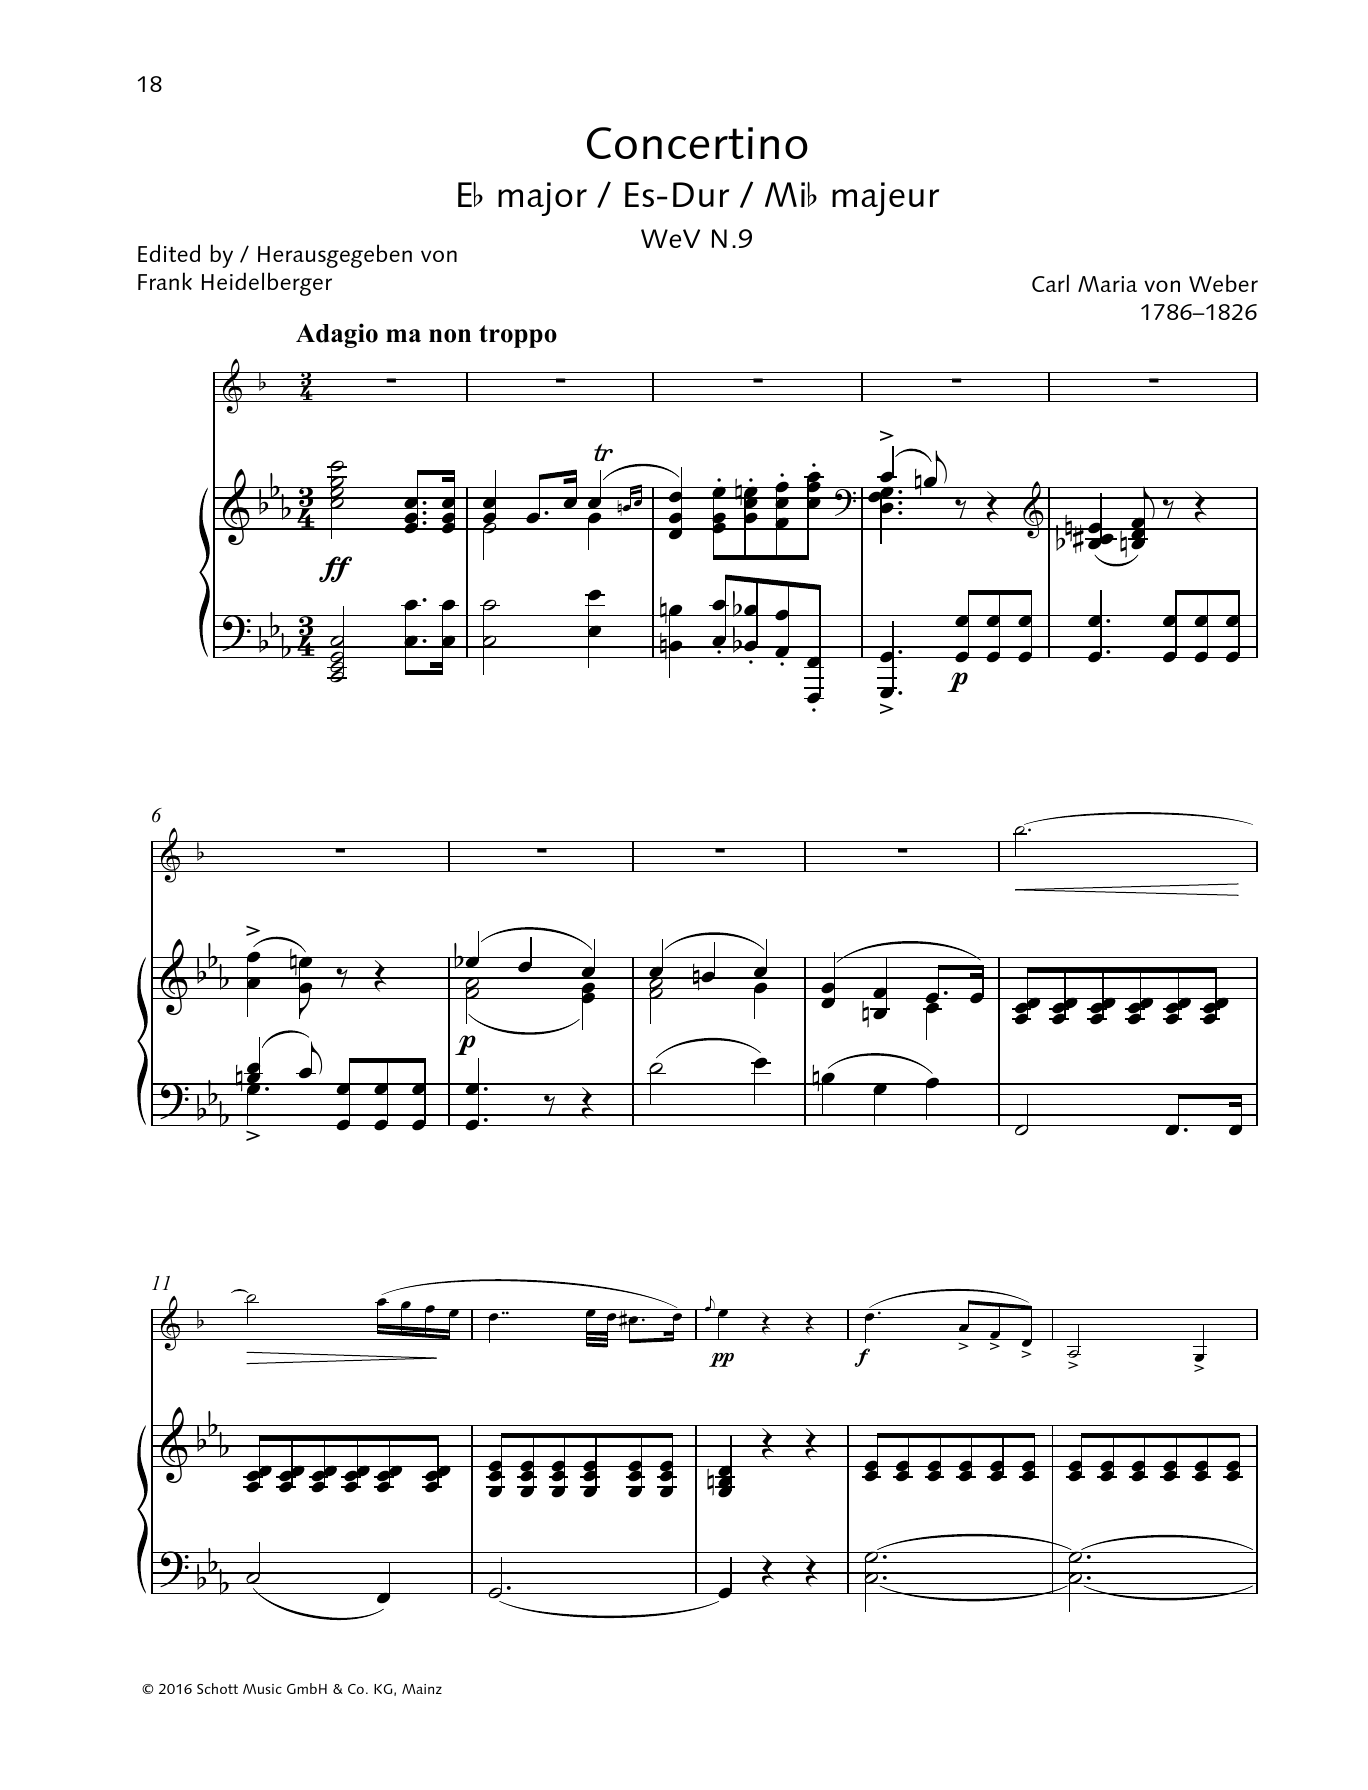 Download Carl Maria von Weber Concertino E-flat major Sheet Music